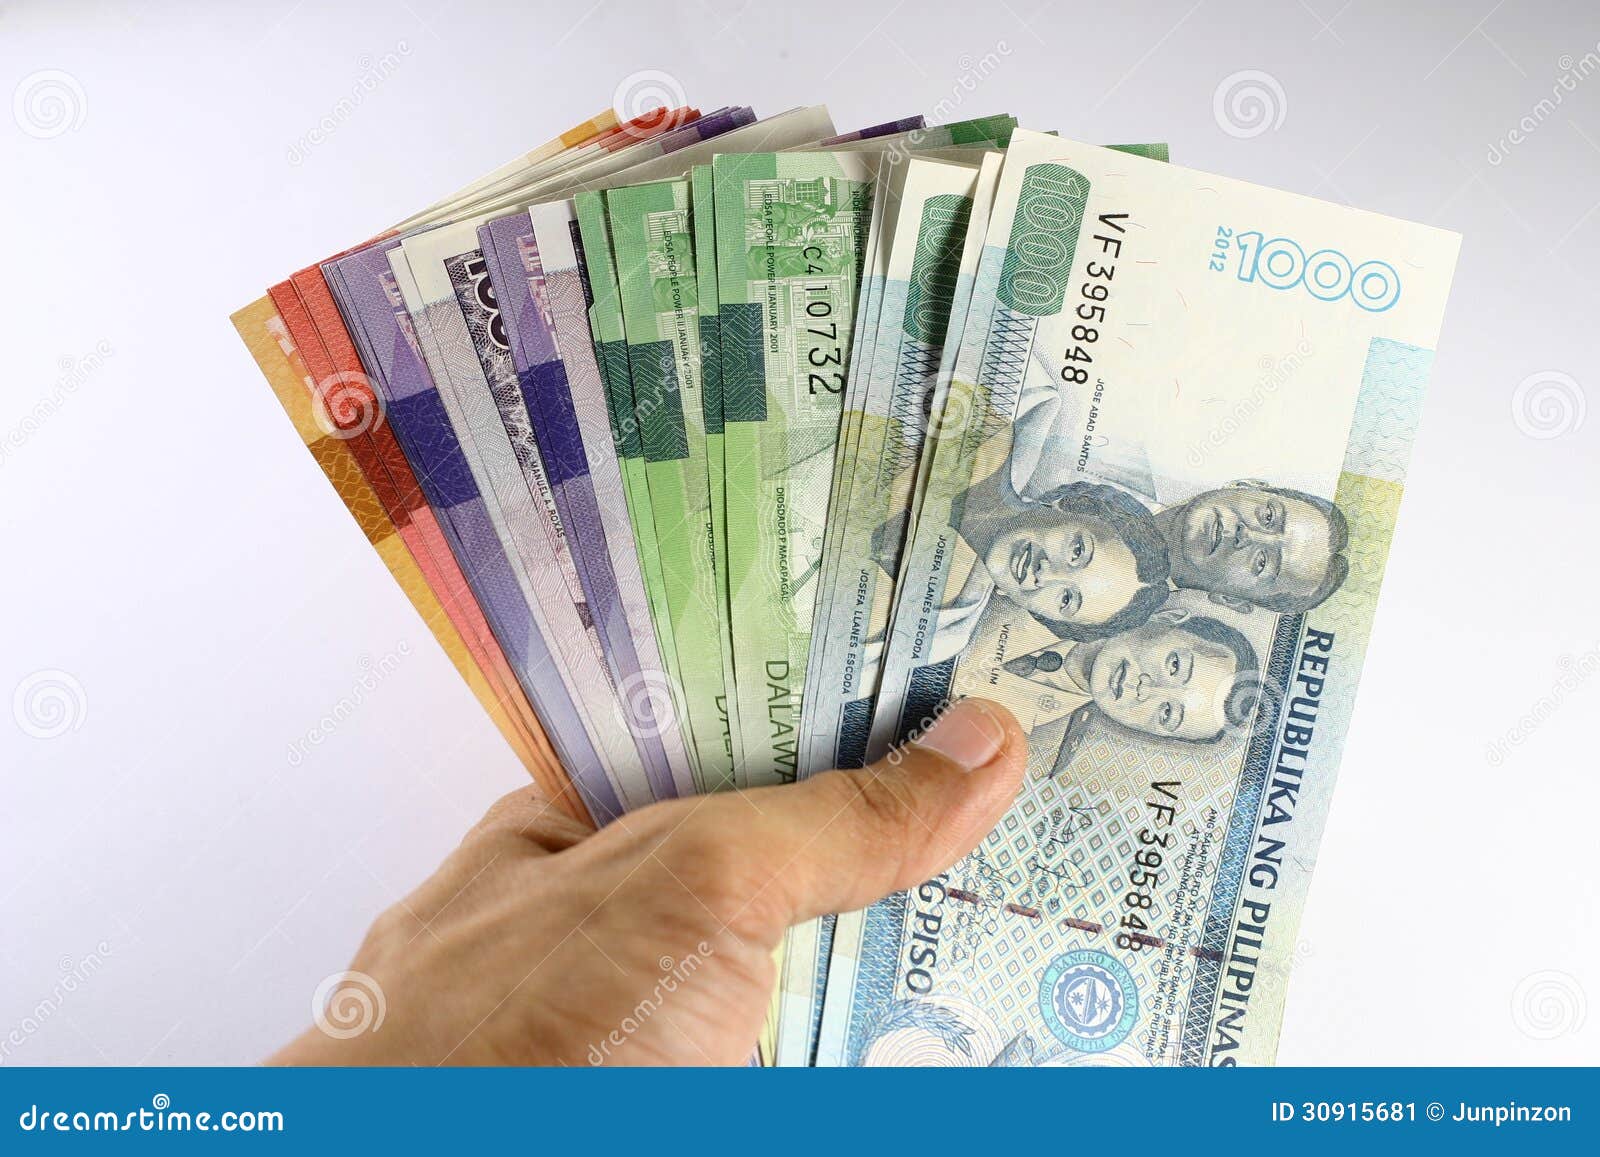 philippine money clipart - photo #12